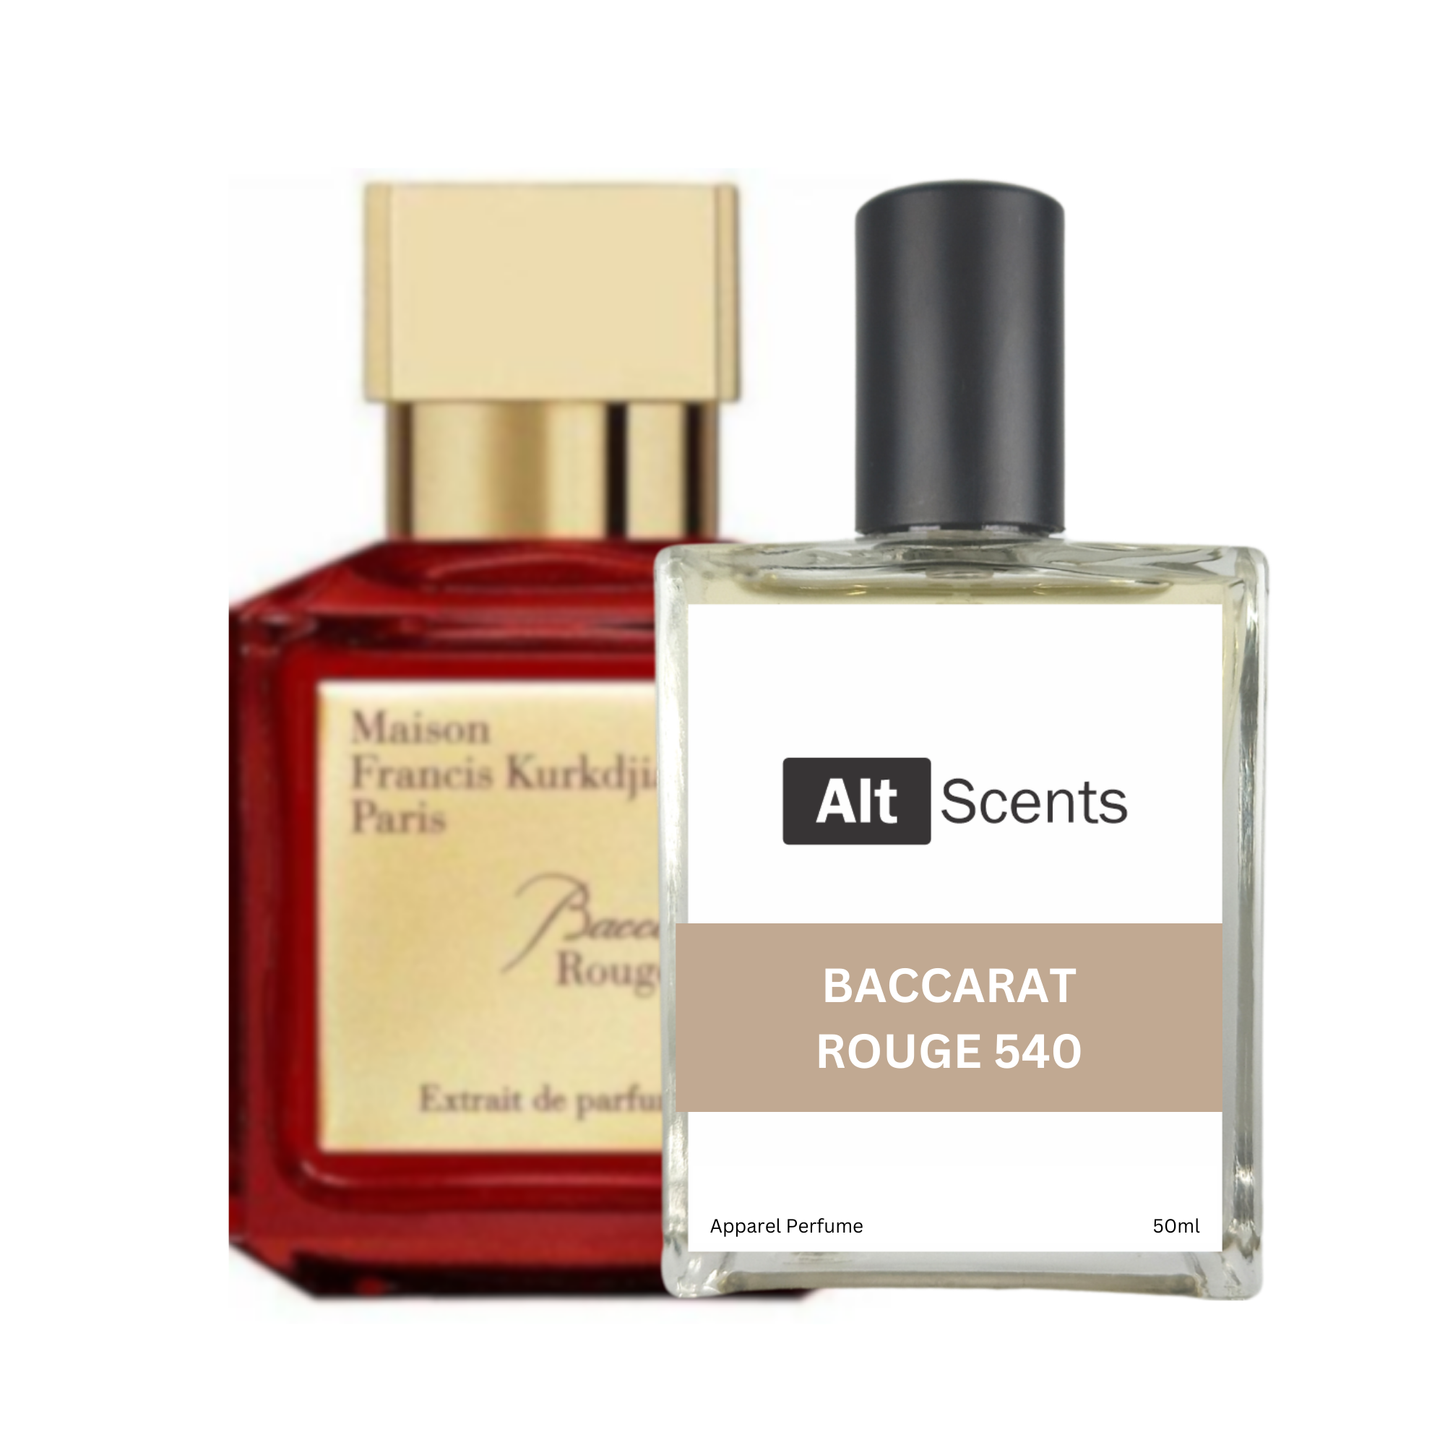 Altscents X Bac*arat Rouge 540 Perfume